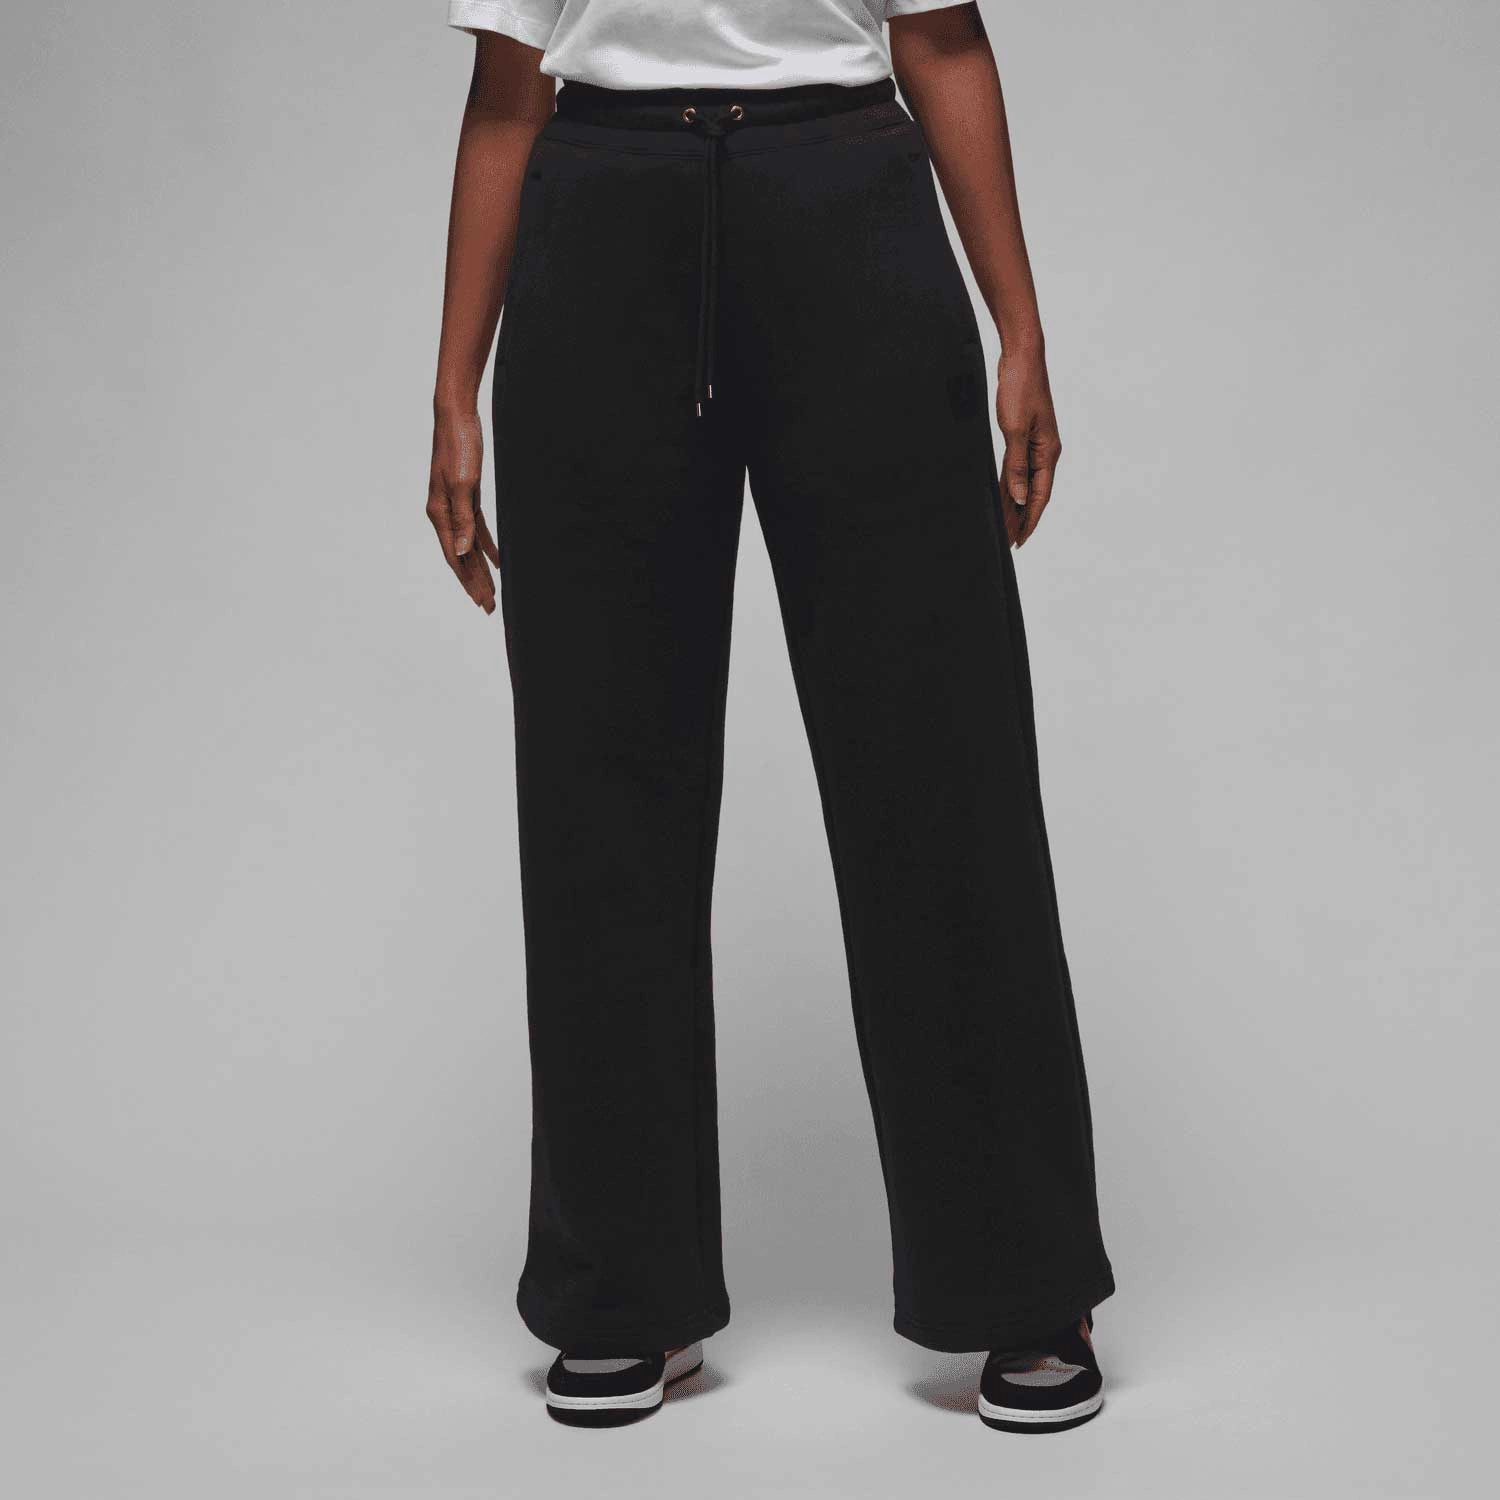 Spodnie damskie Nike Sportswear Tech Fleece FB8330-010